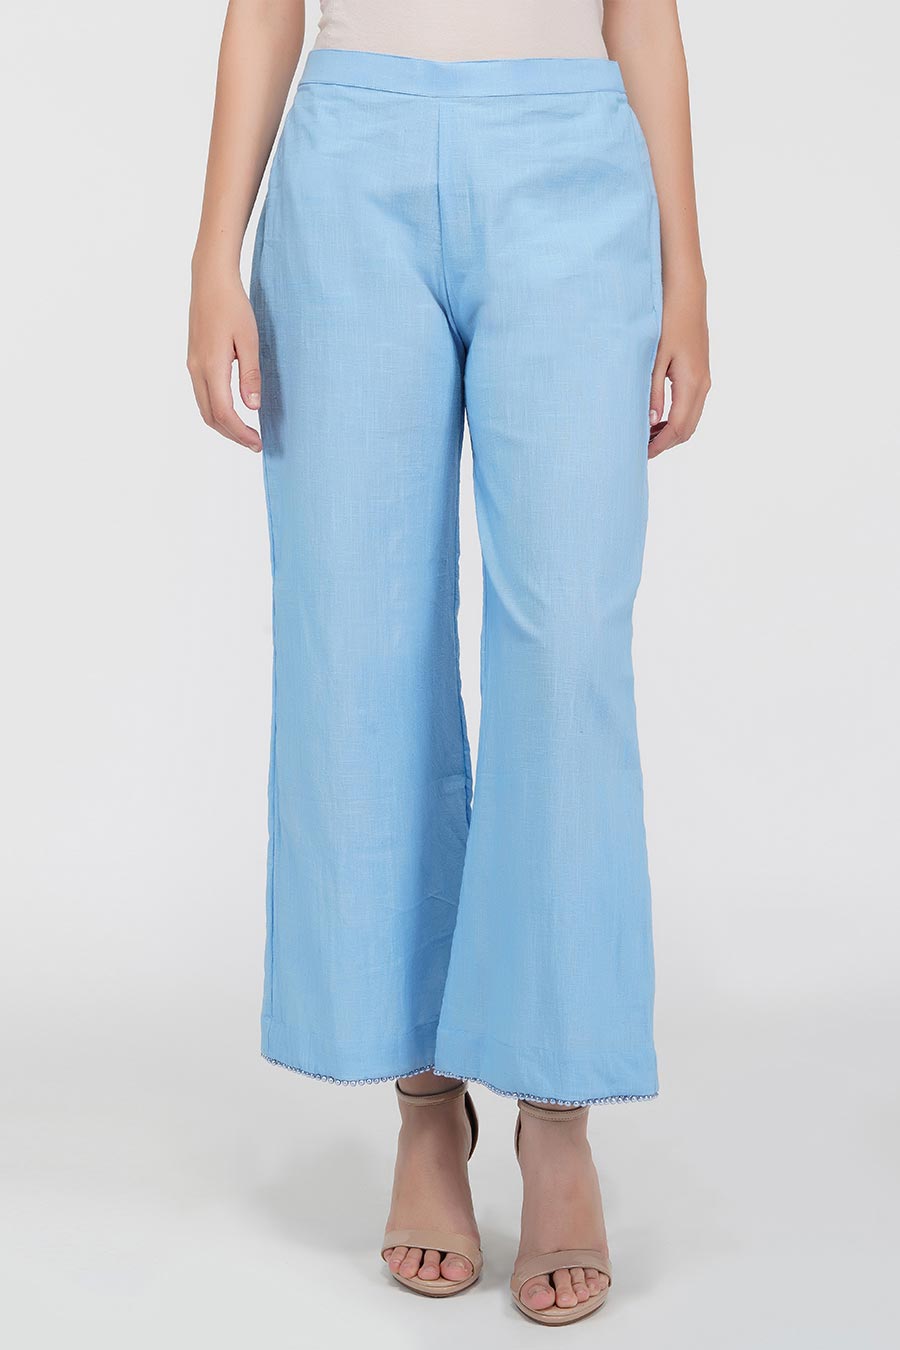 Pearl Hemline Blue Flared Pants